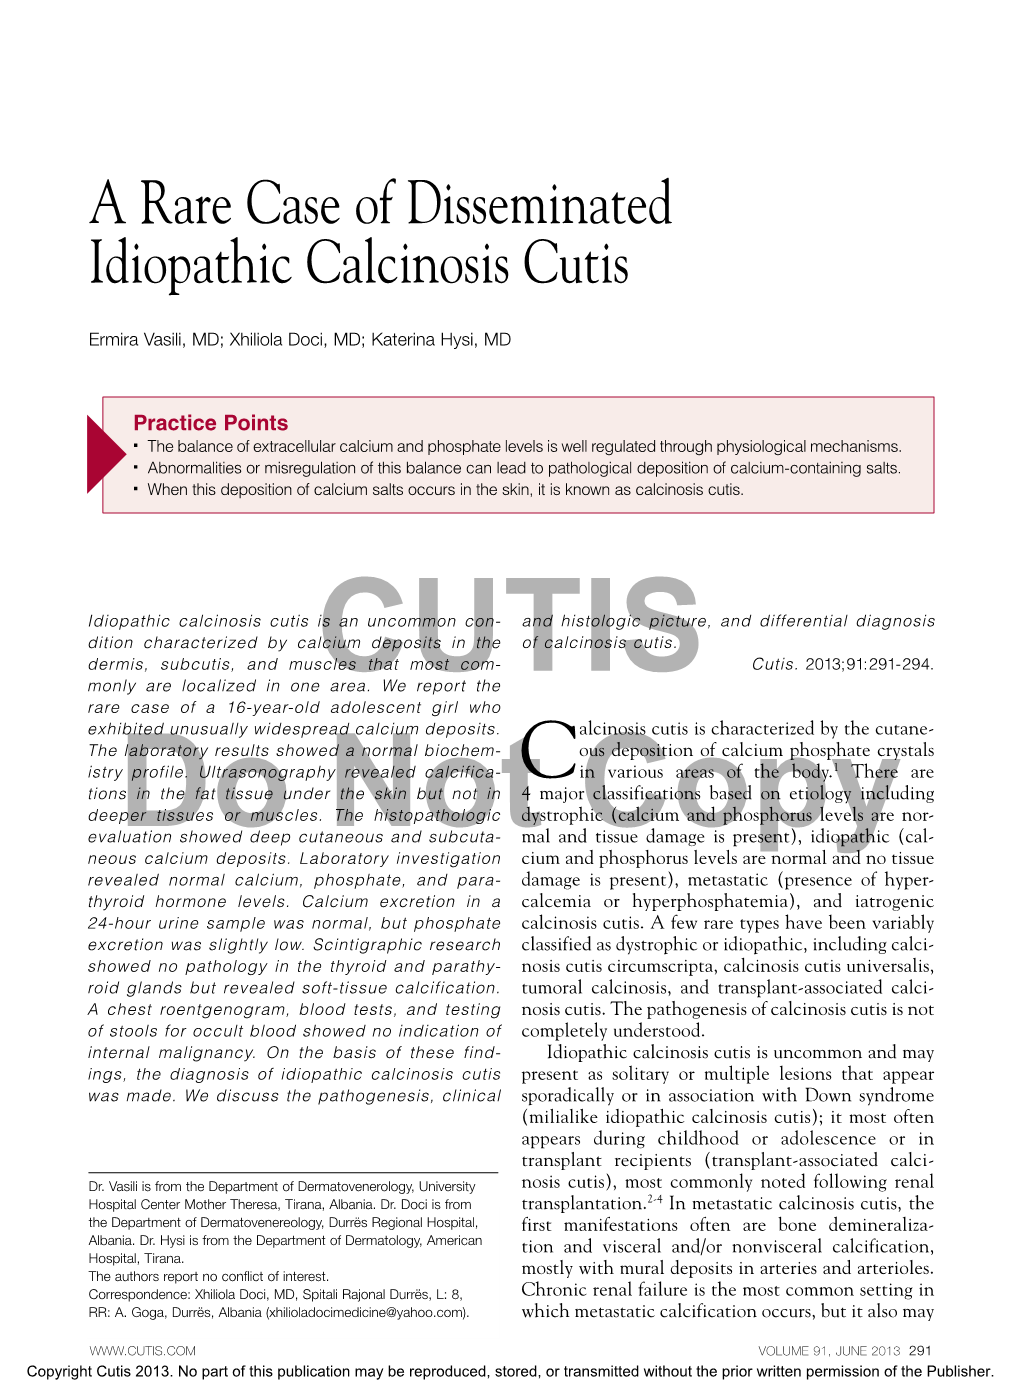 A Rare Case of Disseminated Idiopathic Calcinosis Cutis